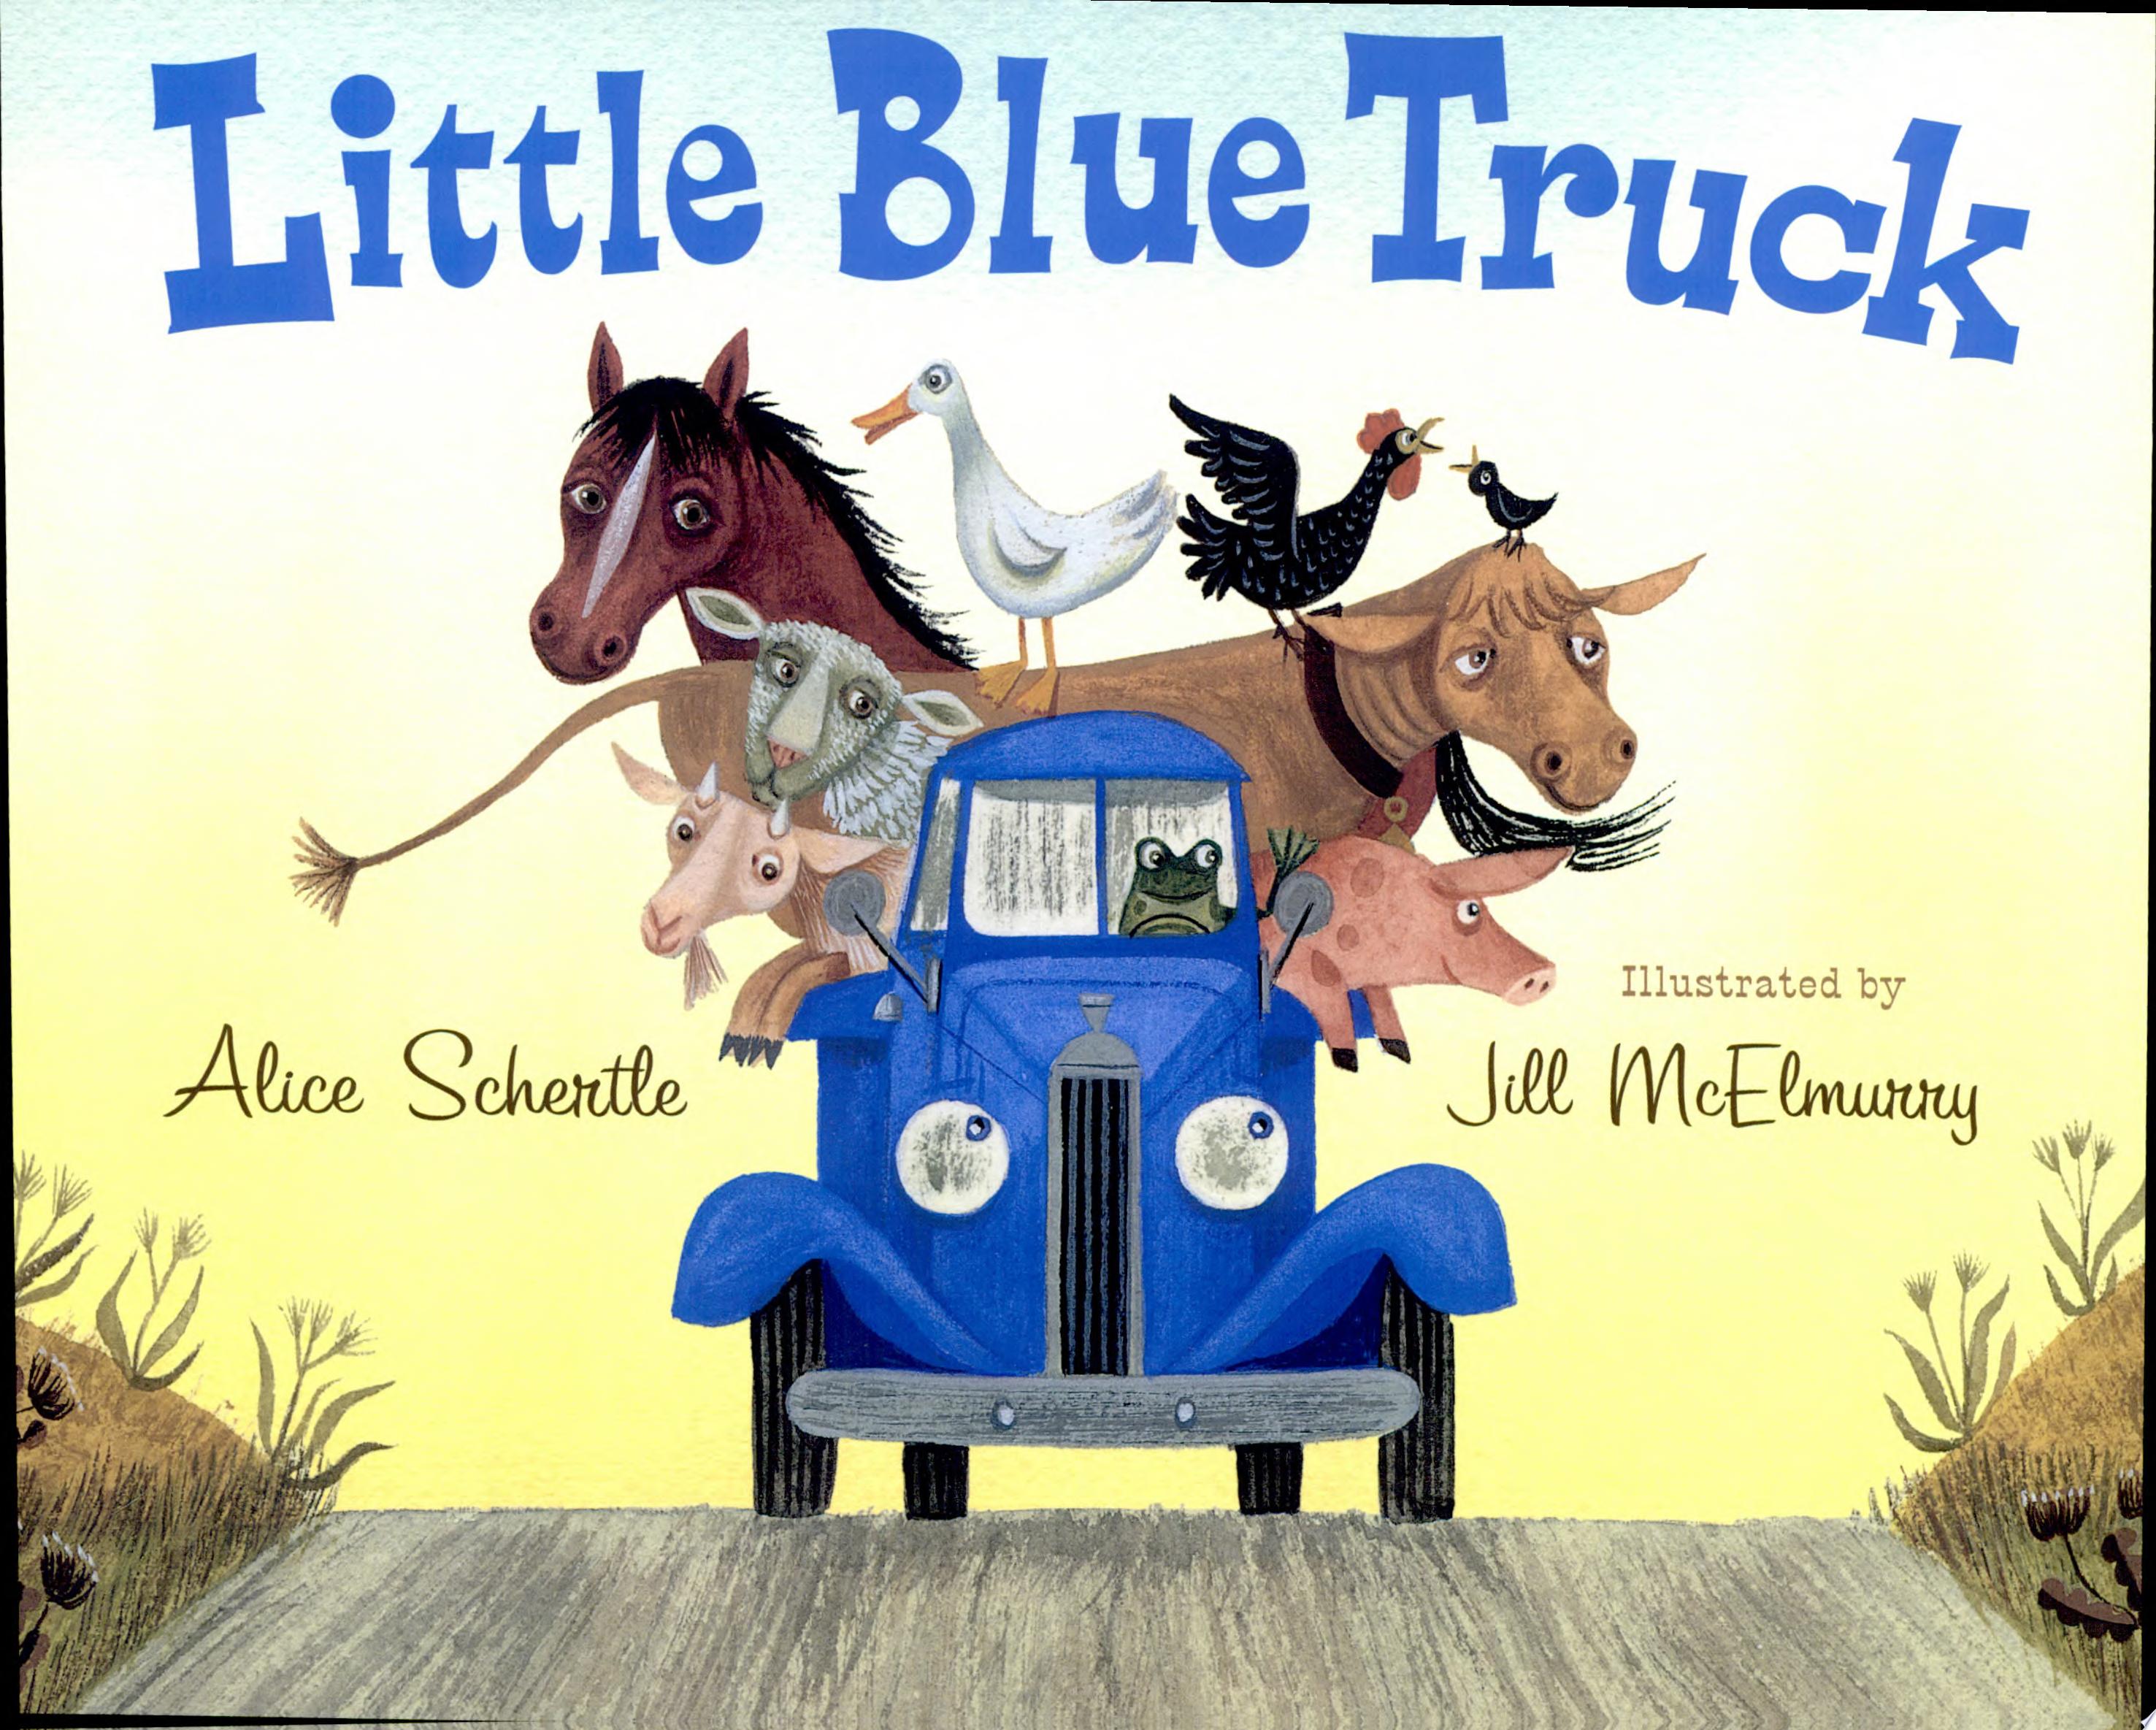 Image for "Little Blue Truck"